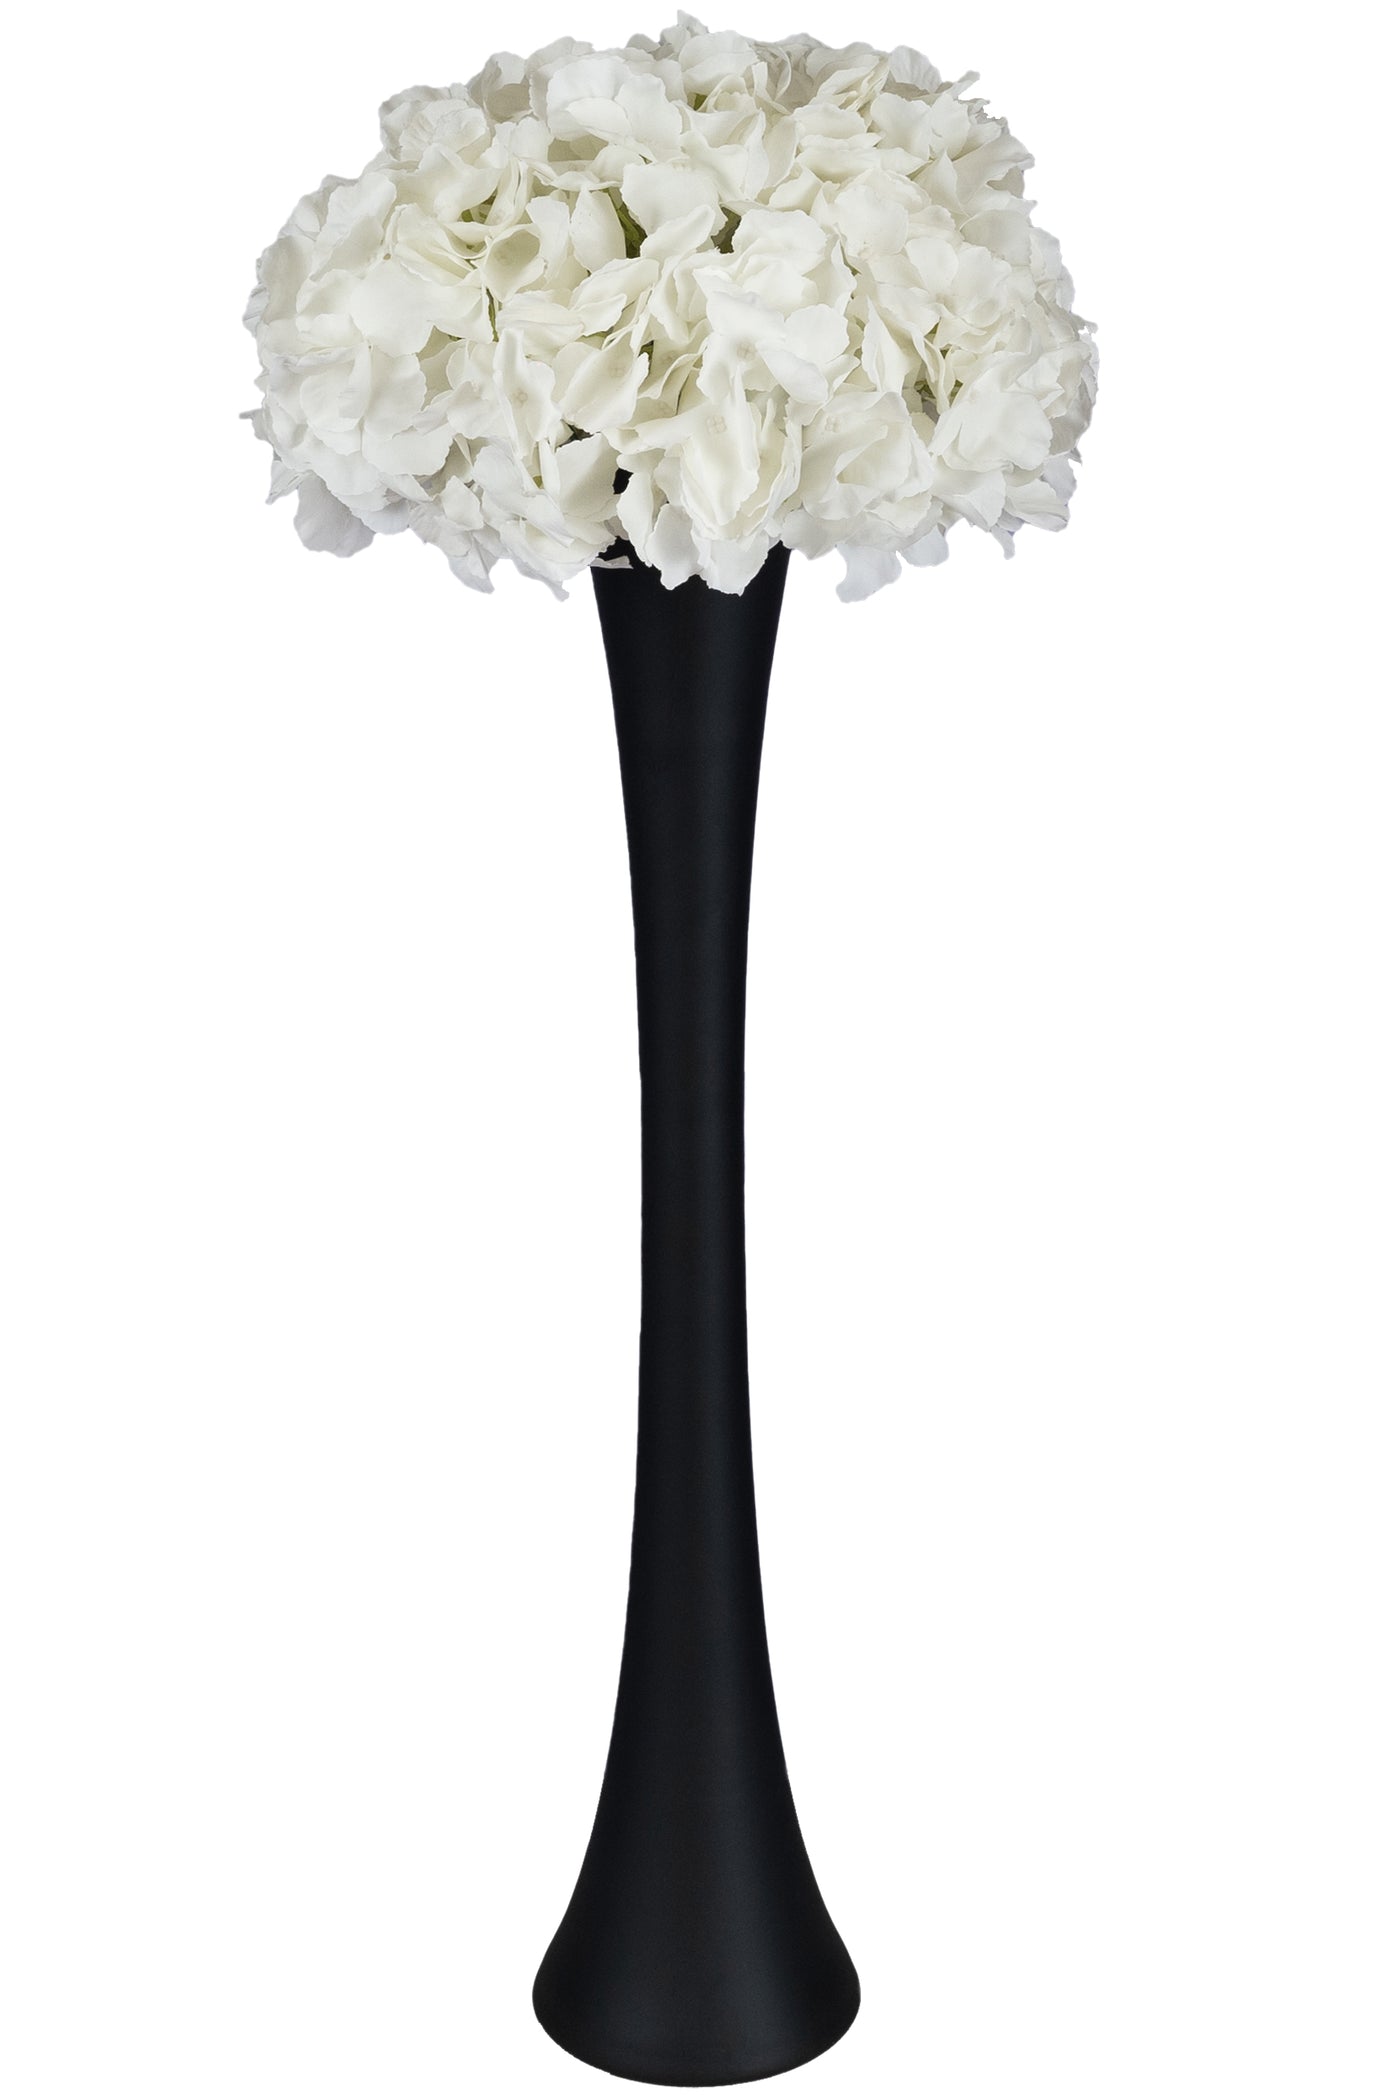 Hortensie artificiala alba D30xH47cm. cu 5 flori